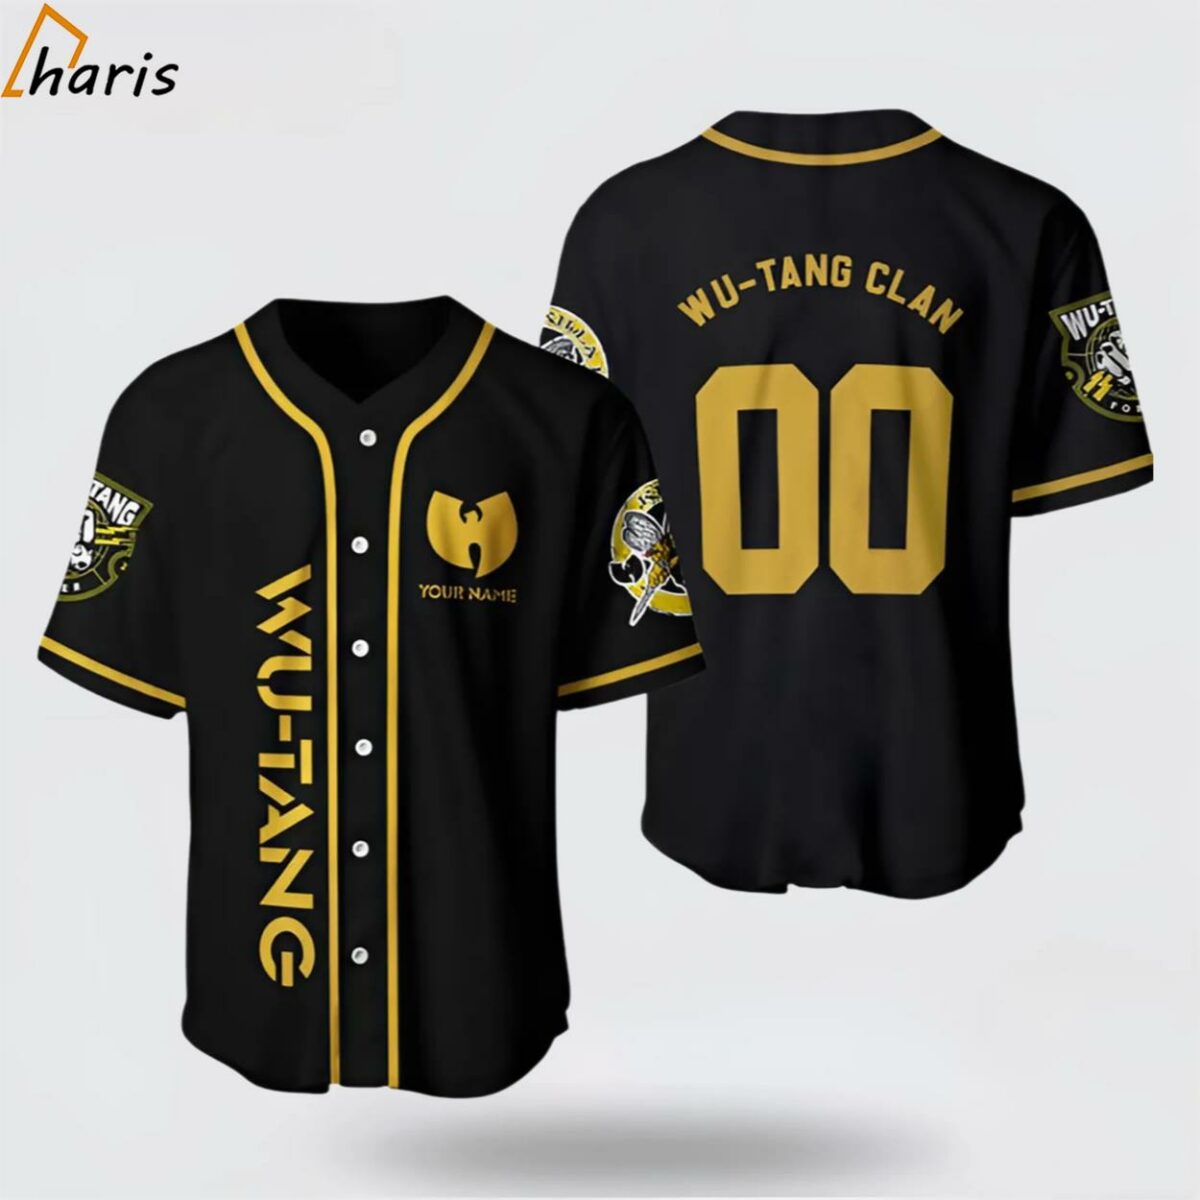 Wu Tang Clan Custom Unisex Full Printed Baseball Jersey 1 jersey